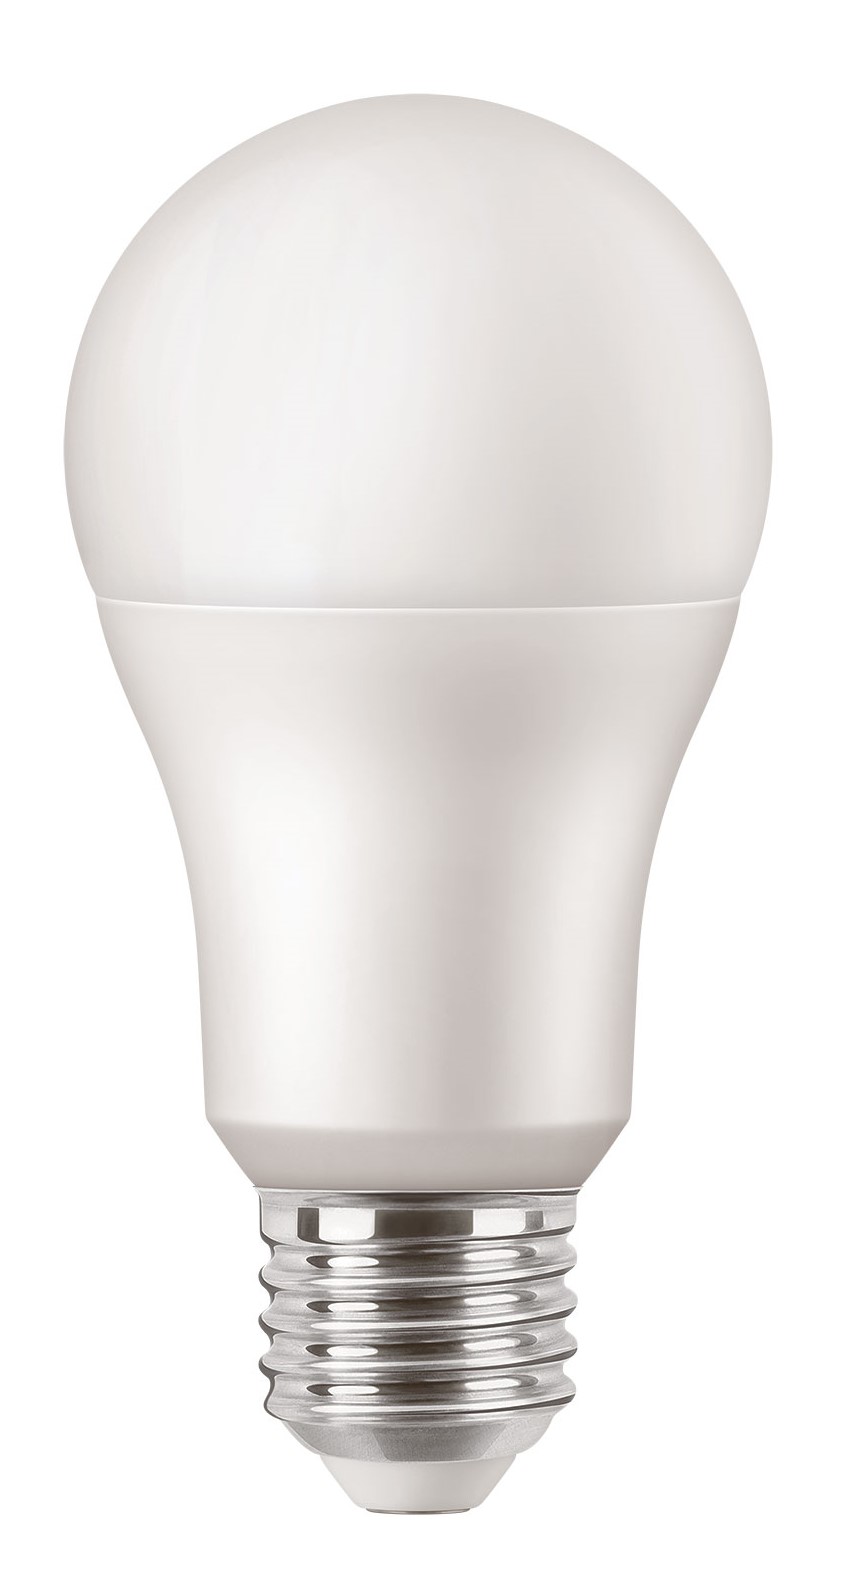 MAZDA LED LAMP 100W A67 E27 COOL WHITE 4000K 840